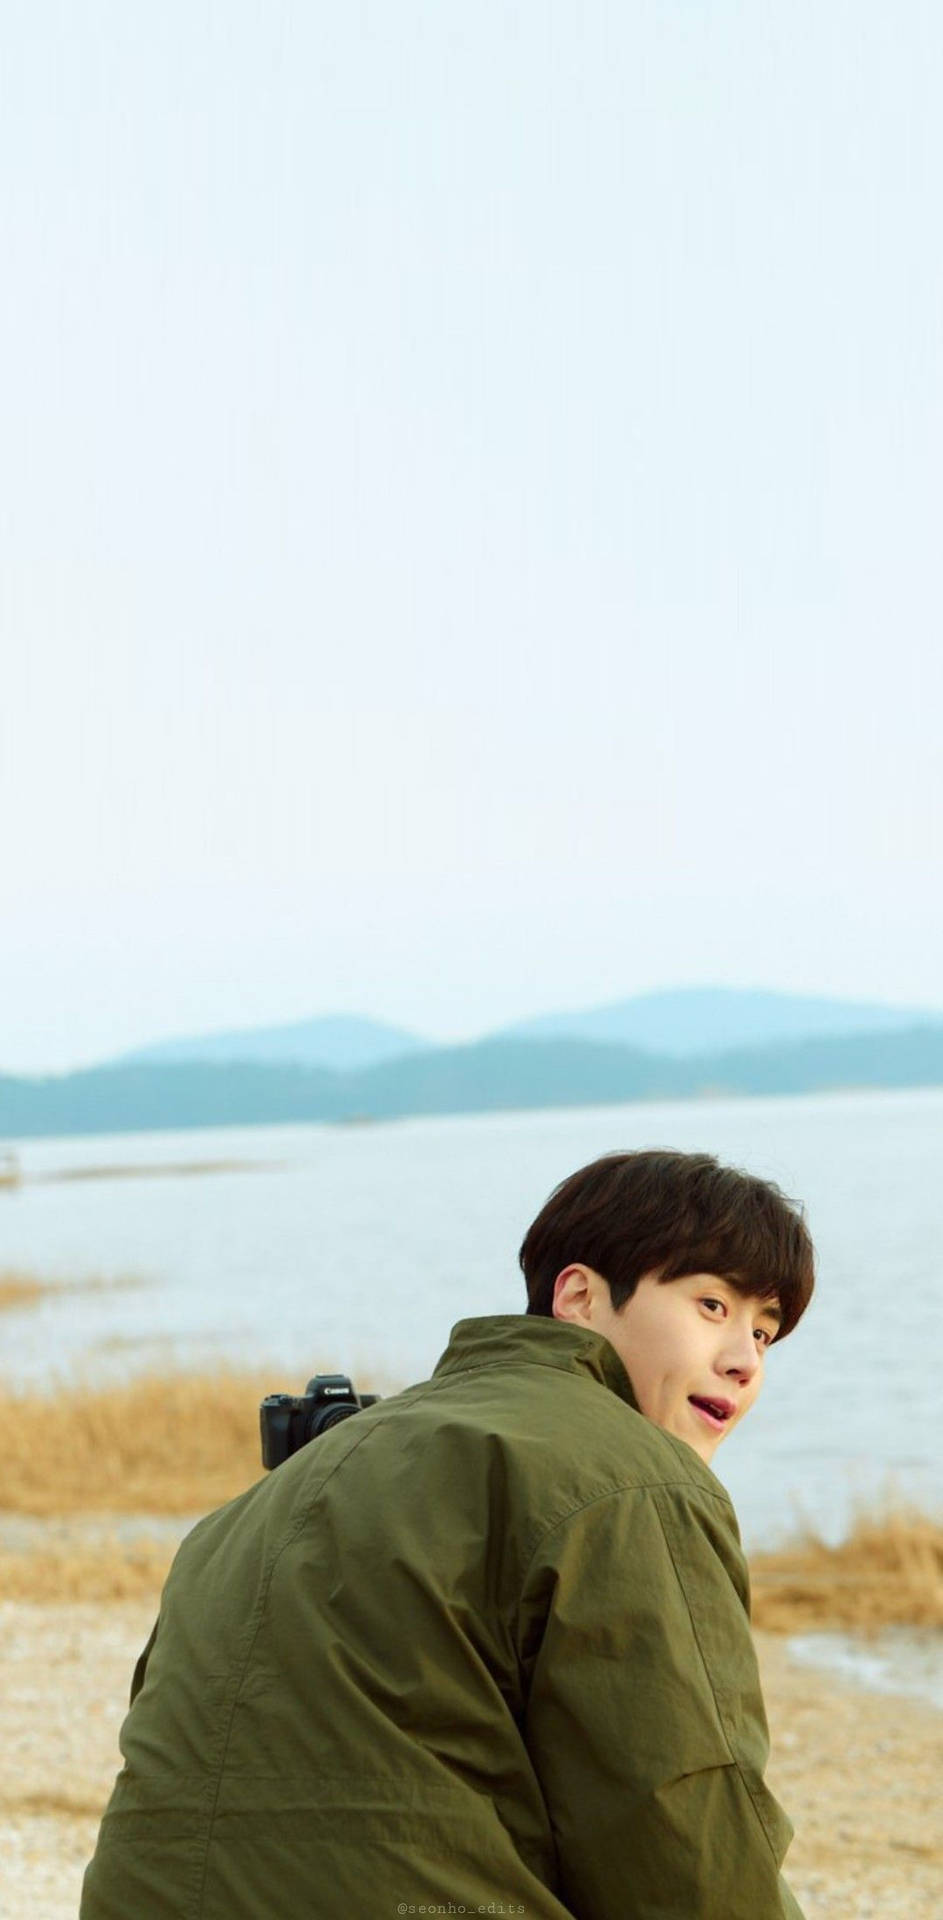 Kim Seon Ho At The Sea Background